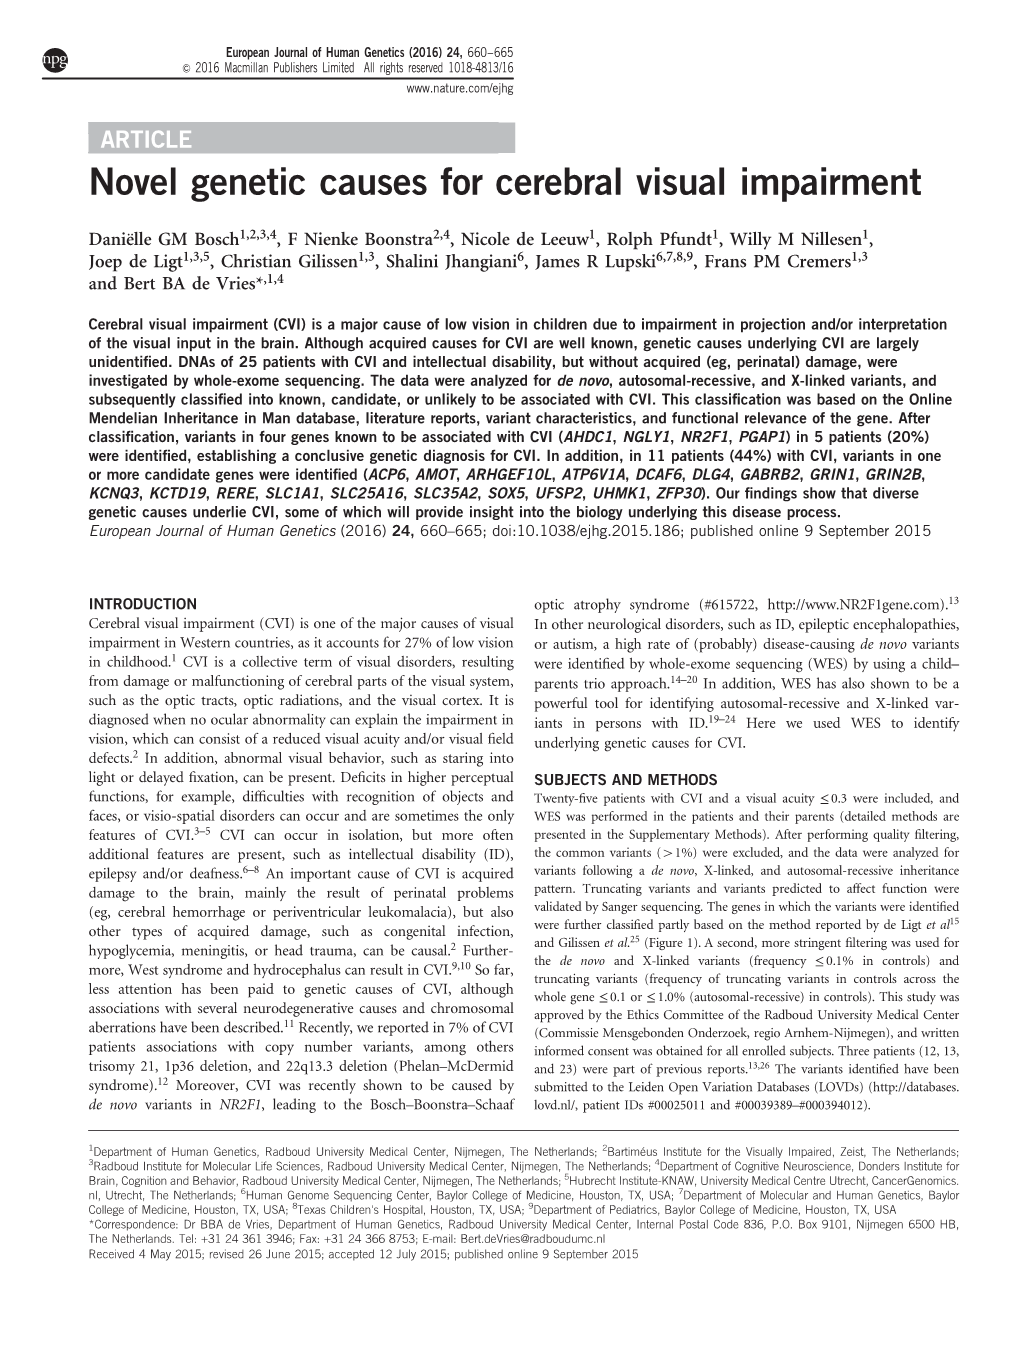 Novel Genetic Causes for Cerebral Visual Impairment